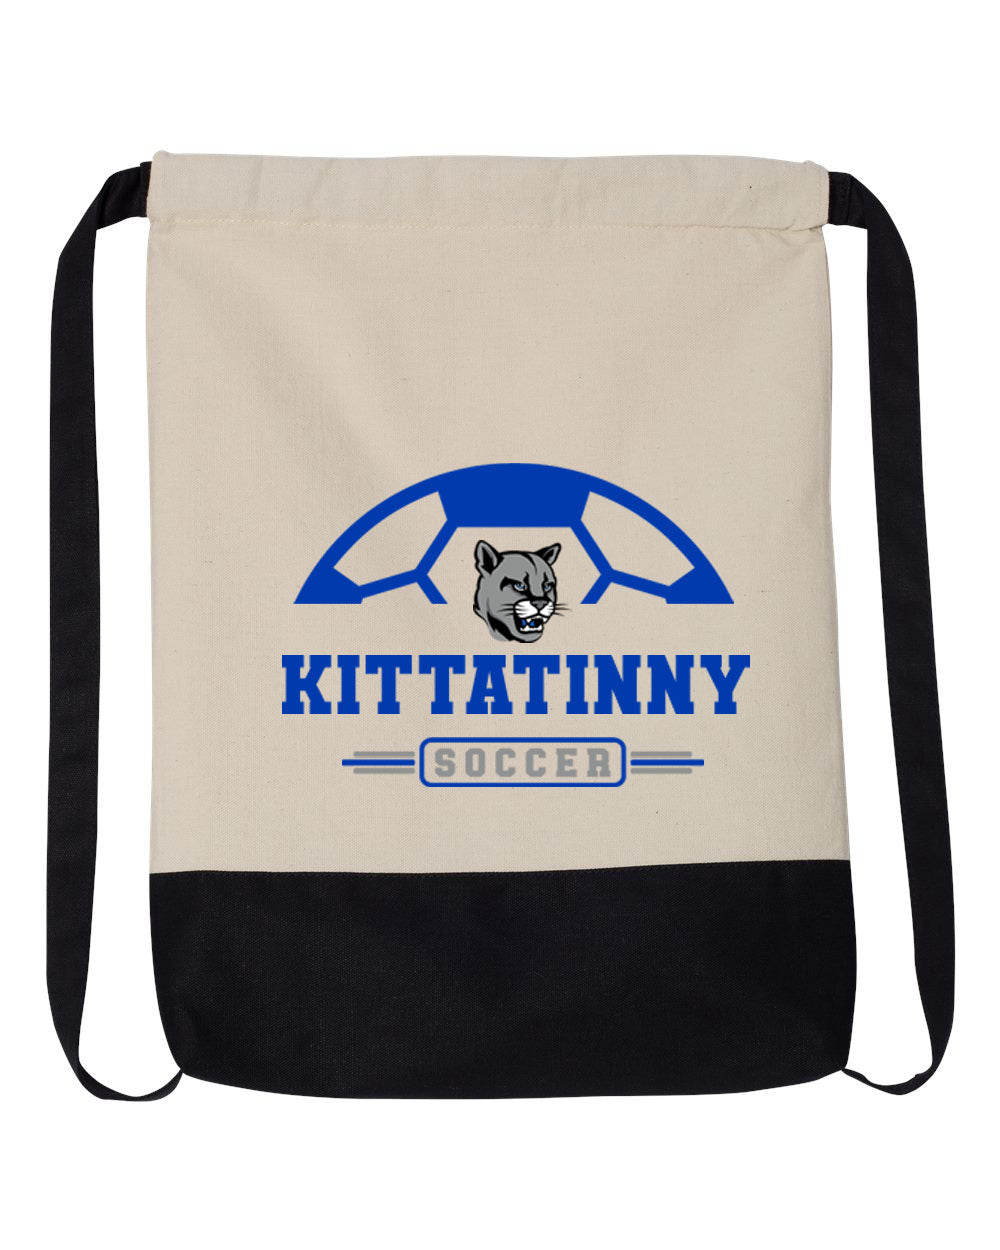 Kittatinny Soccer Design 2 Drawstring Bag